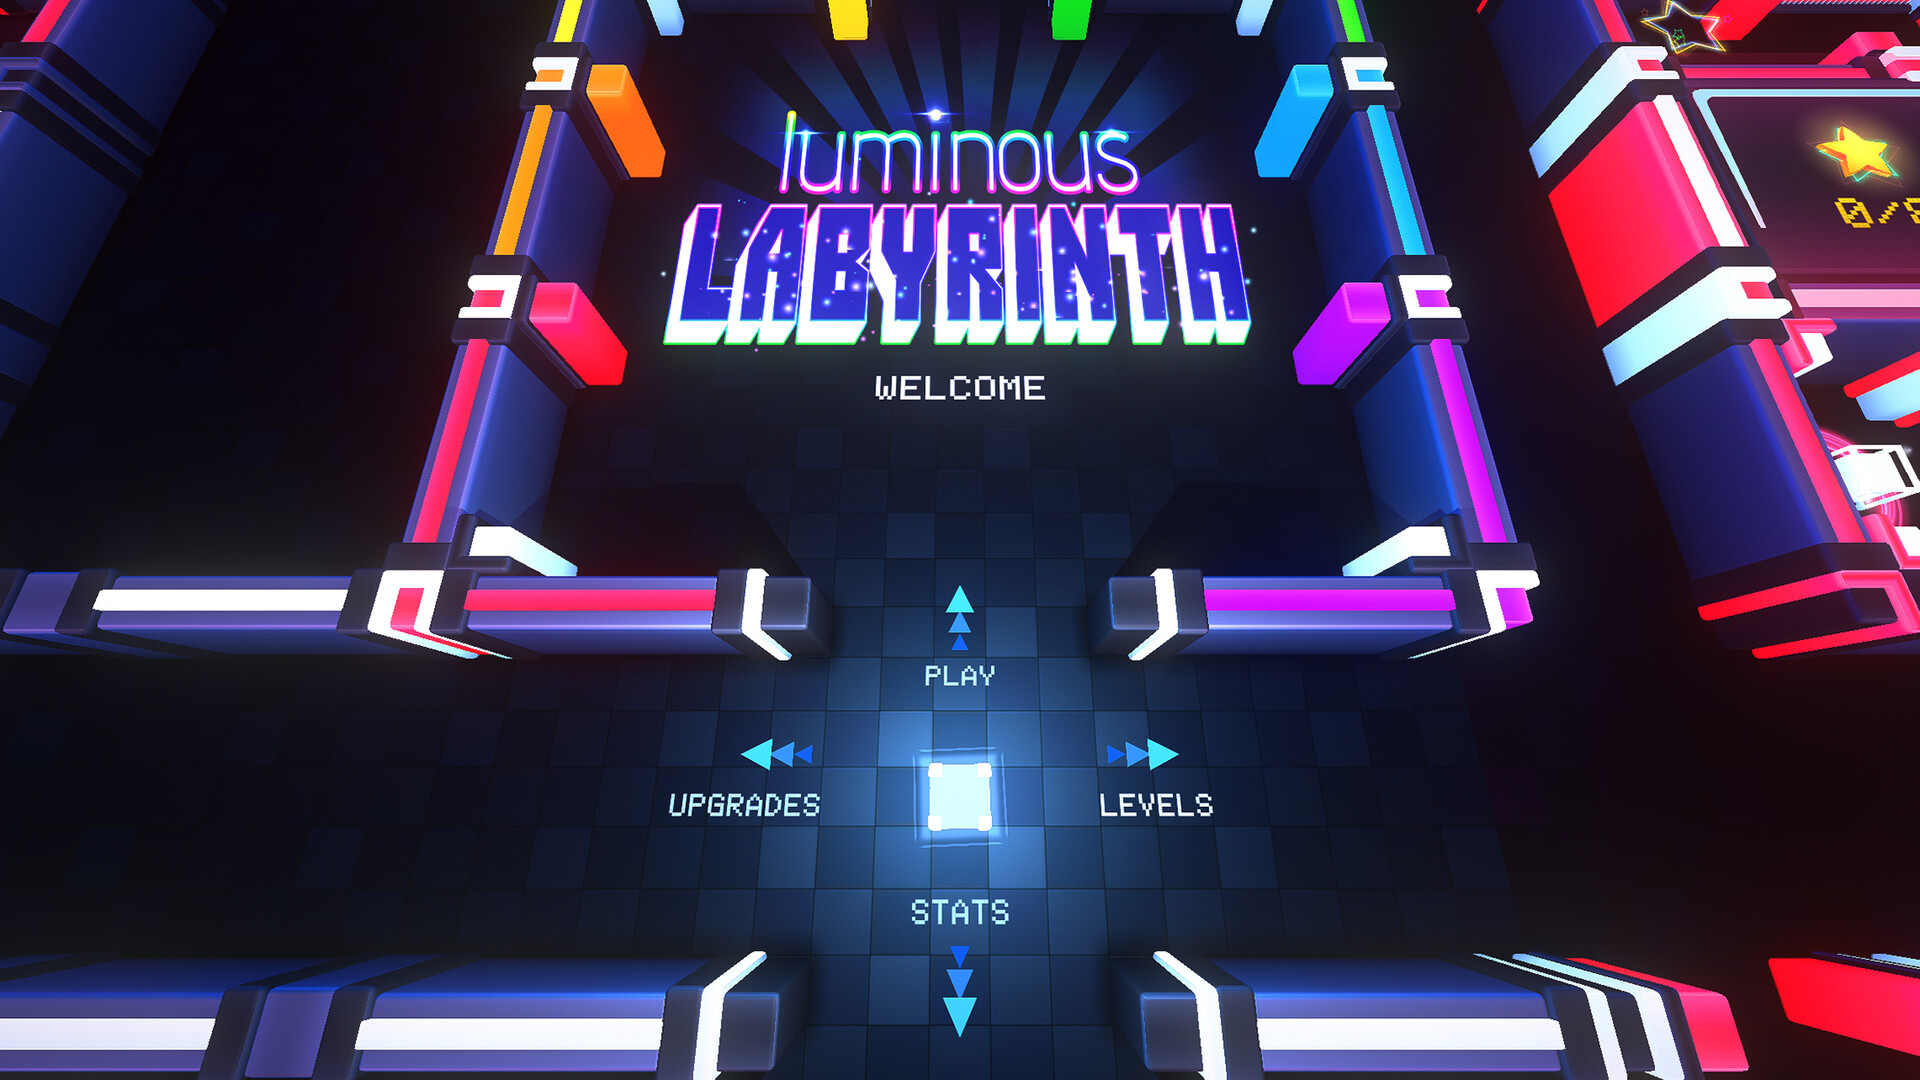 Luminous Labyrinth Free Download